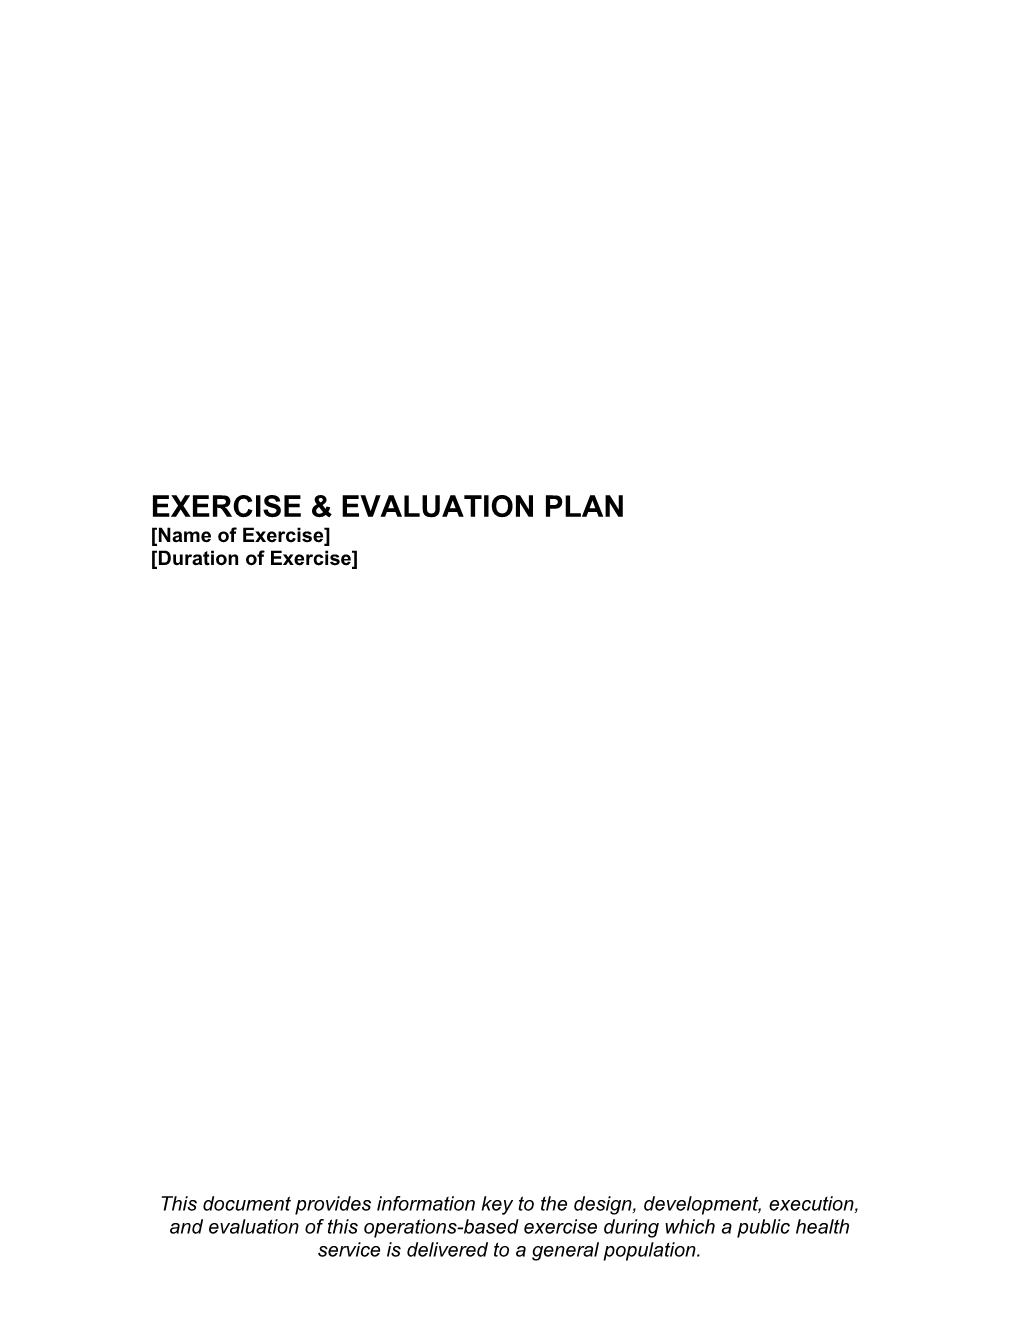 Emergency Dispensing Site Exercise & Evaluation Plan